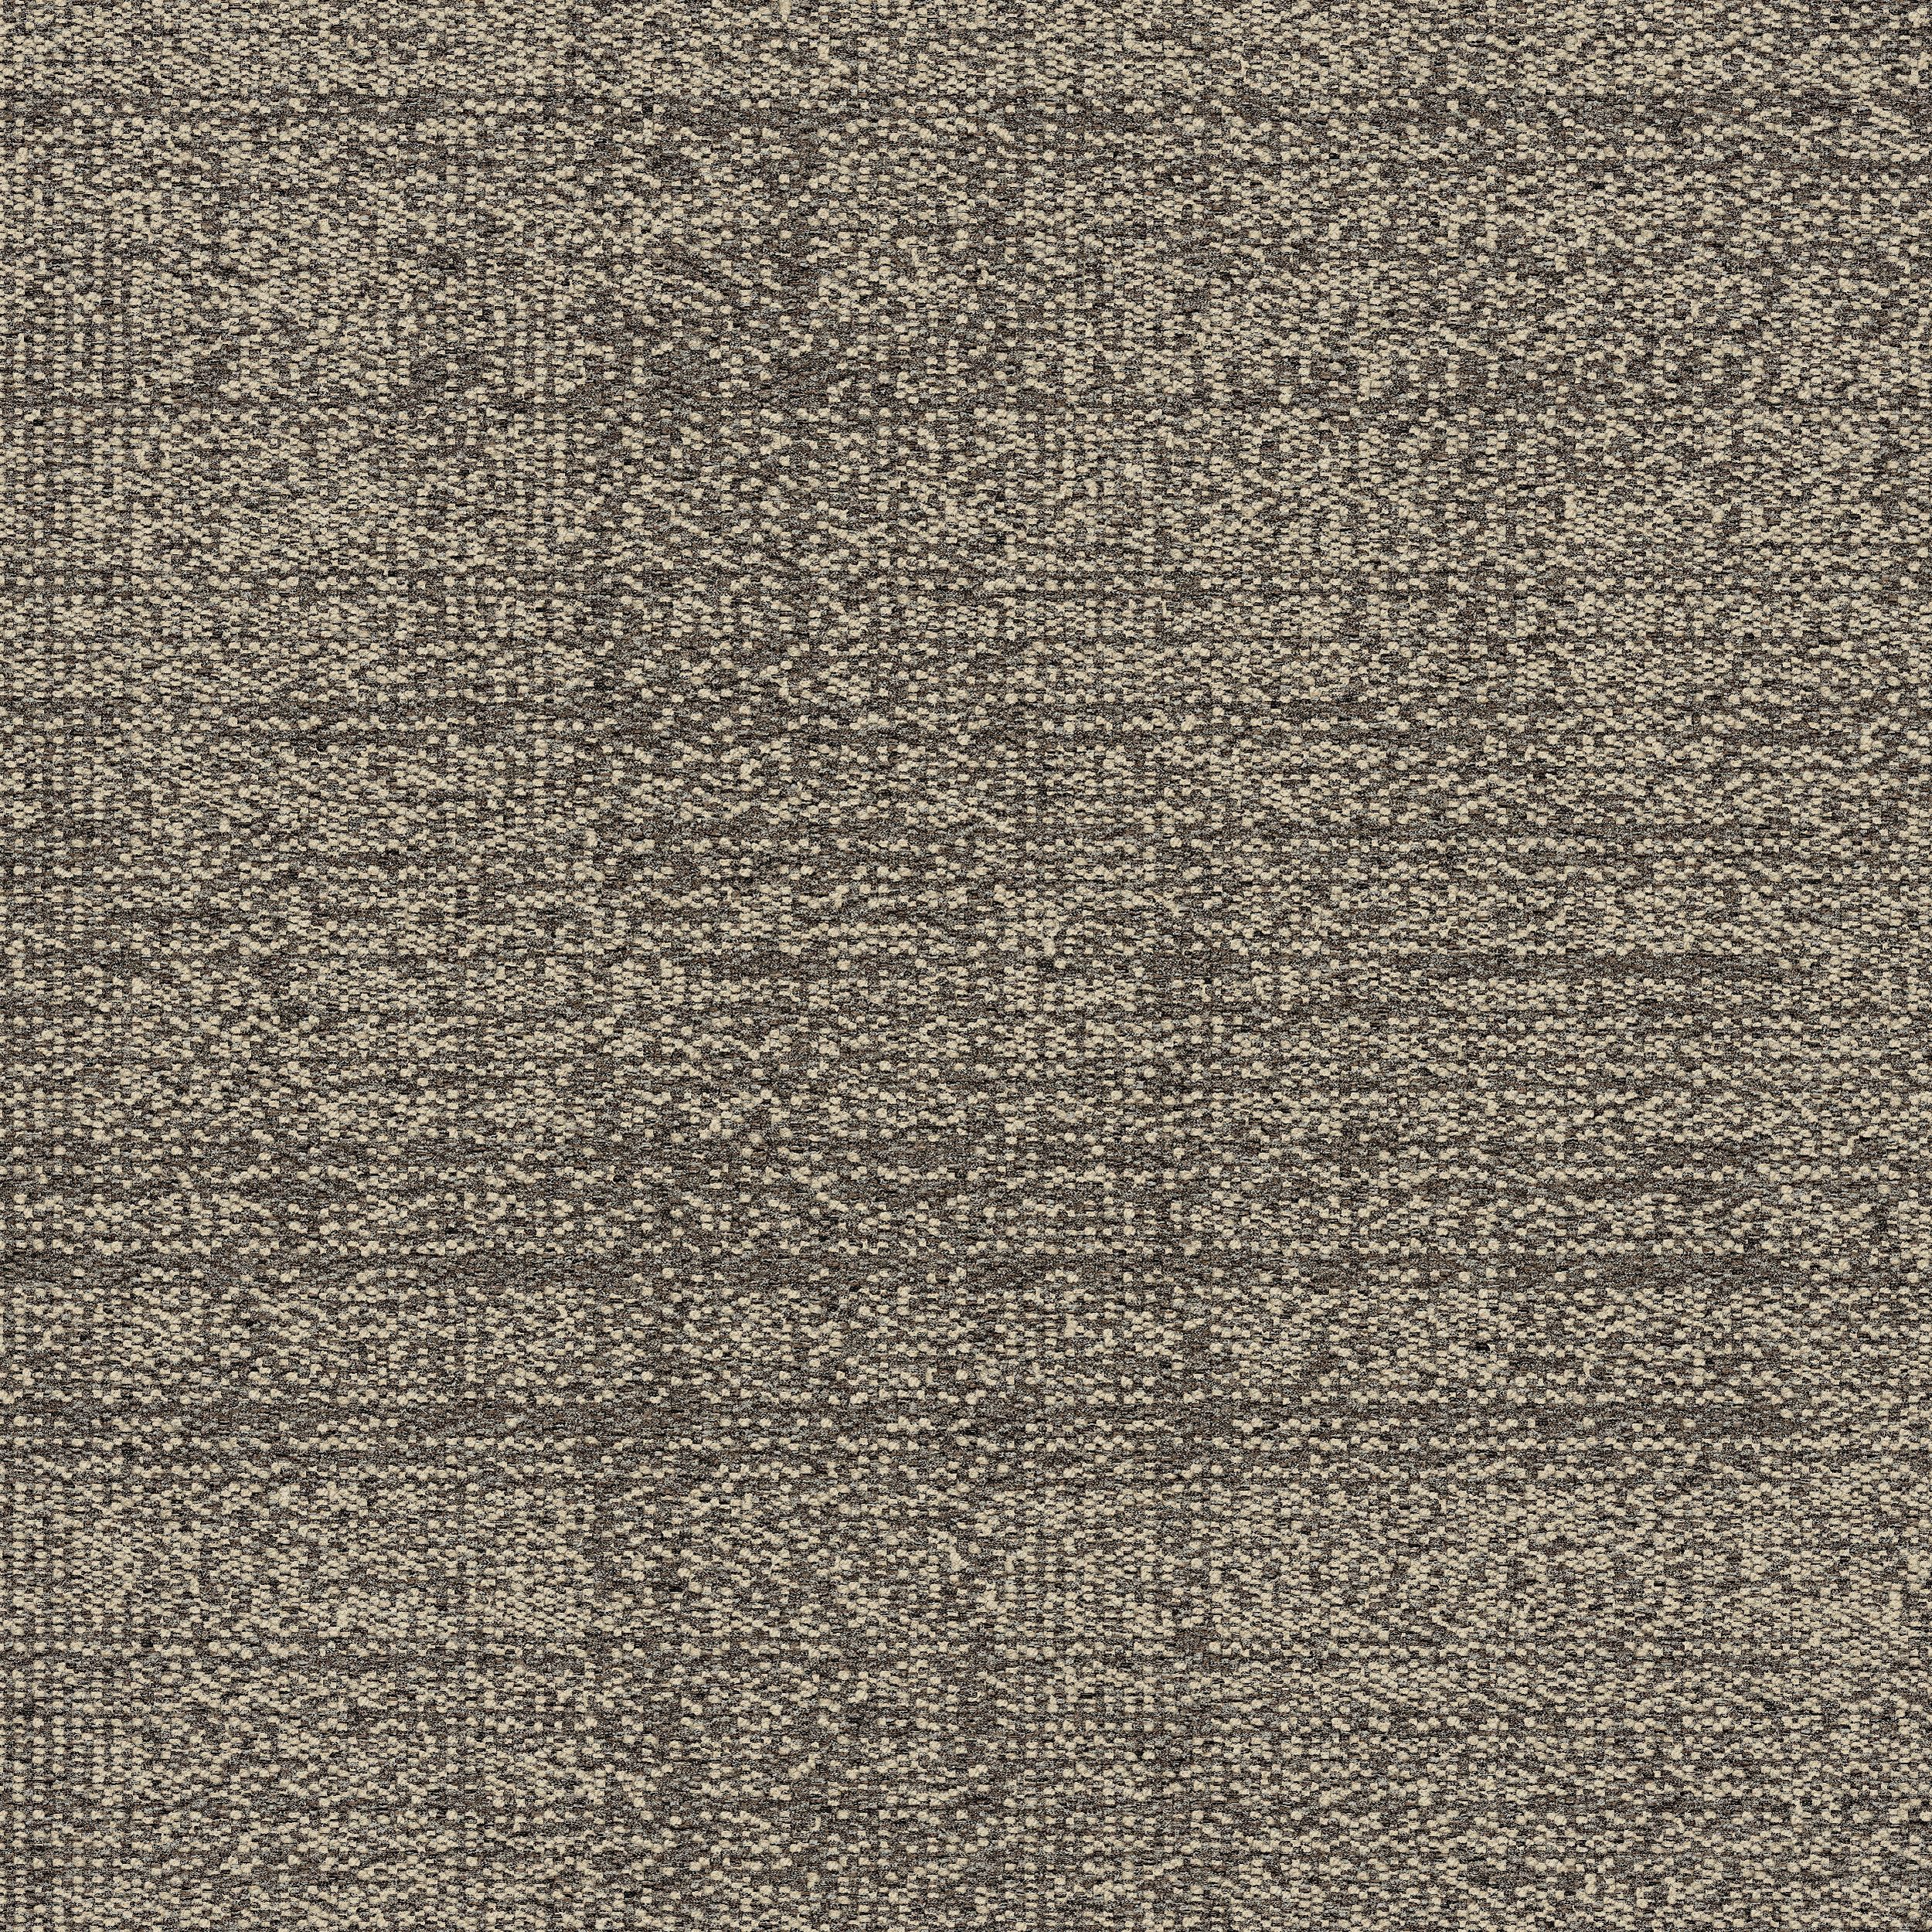 DL926N Carpet Tile In Pecan numéro d’image 1